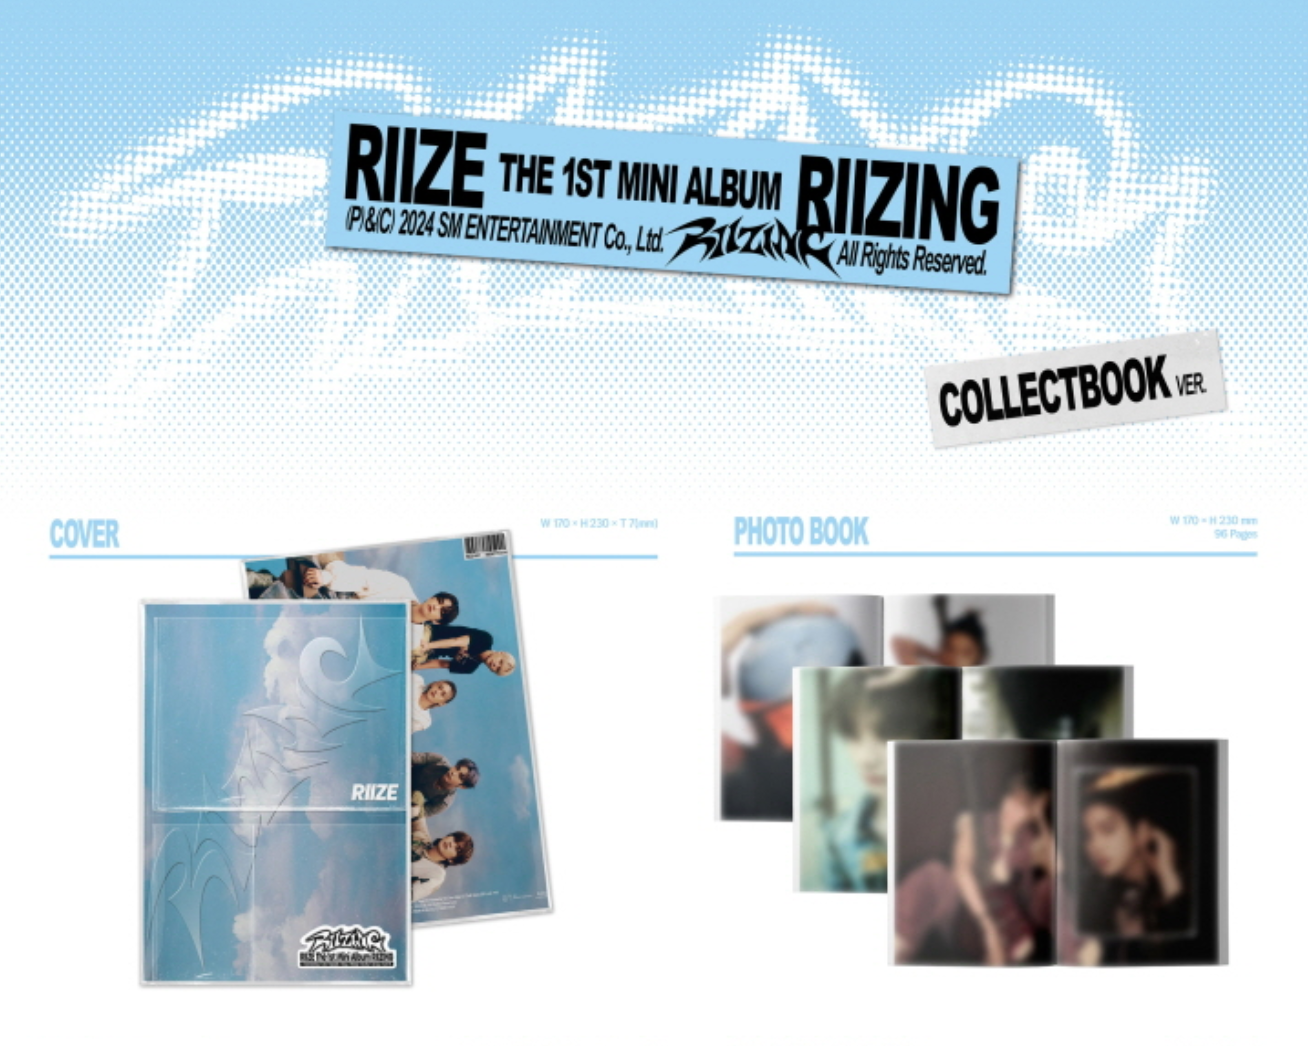 RIIZE - RIIZING (1ST MINI ALBUM) COLLECT BOOK VER.